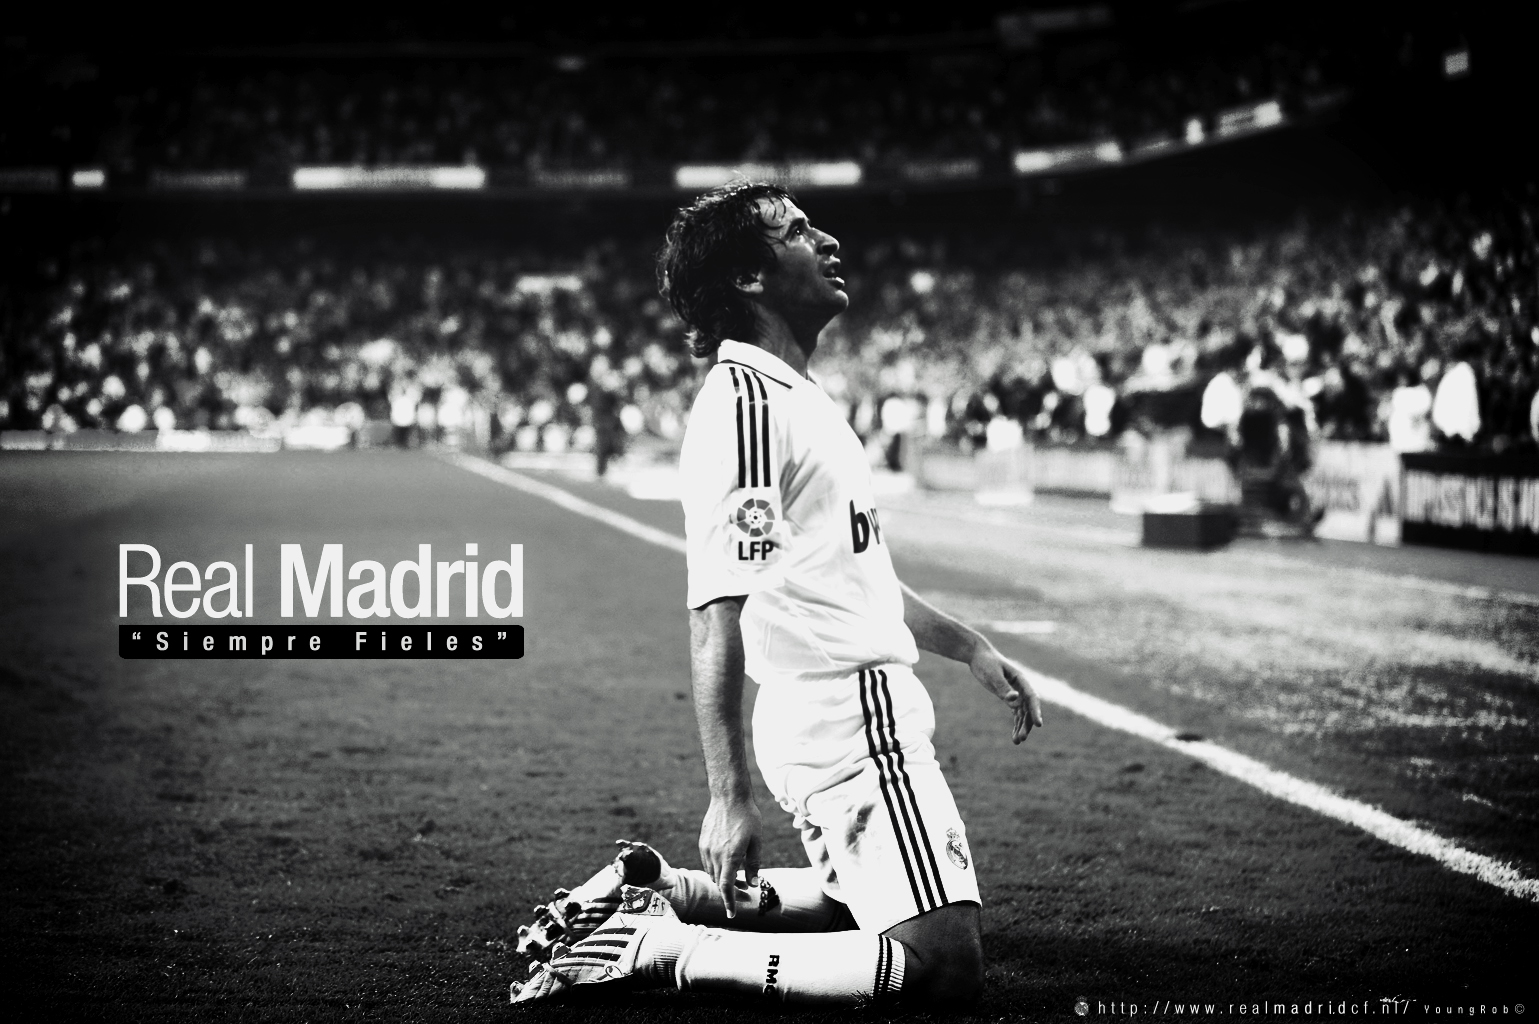 Wallpaper Xp Real Madrid